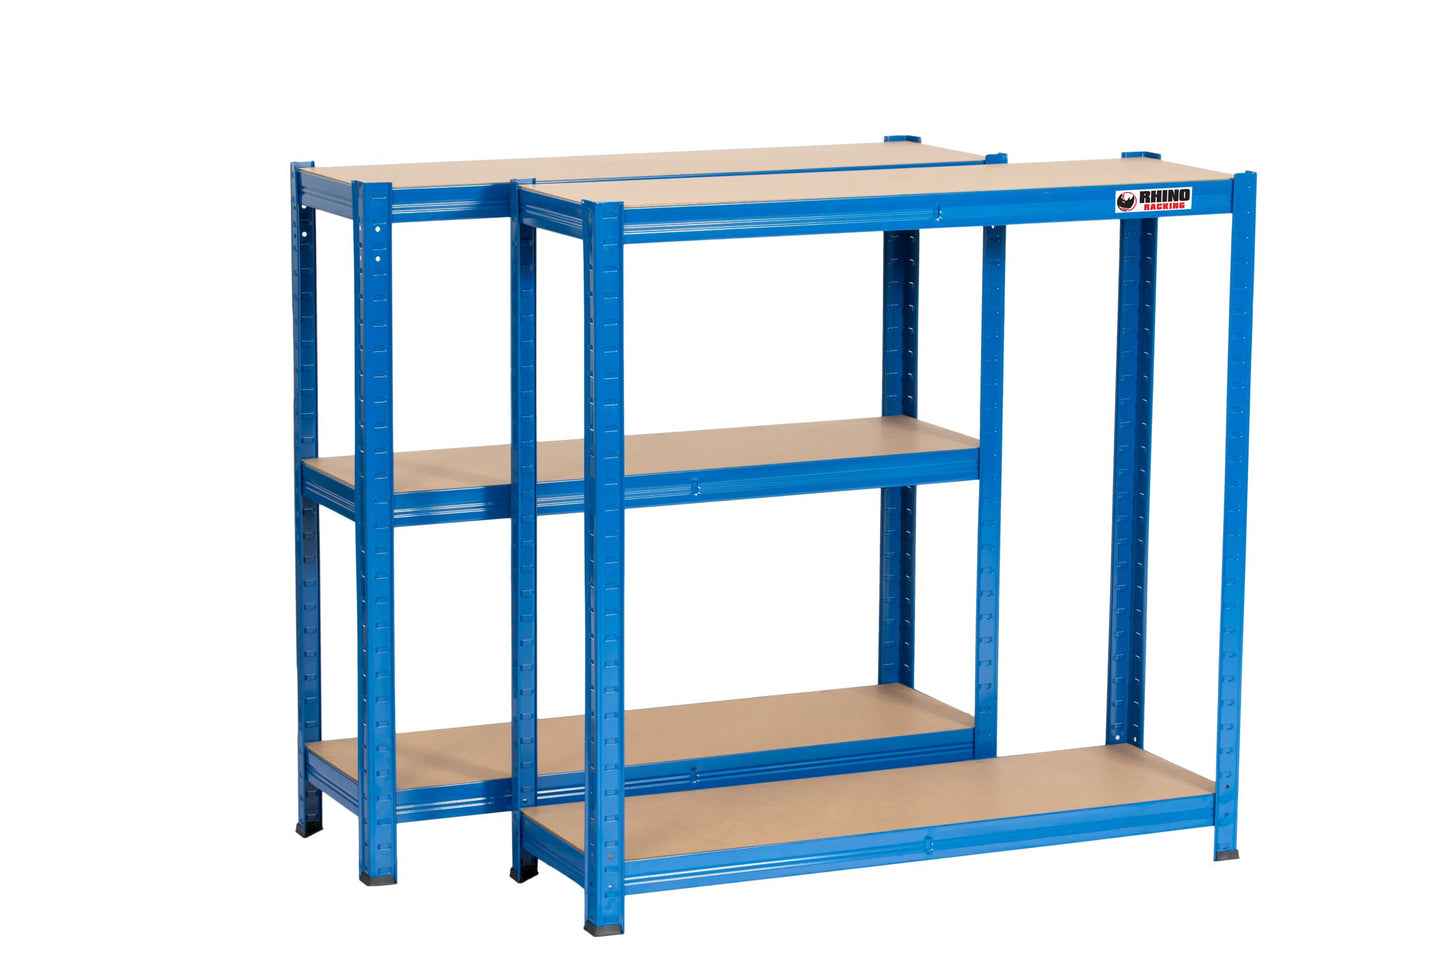 180 x 90 x 30cm | Blue | 5 Tier Boltless Heavy Duty Garage Shelving Unit | 1000kg Load Weight